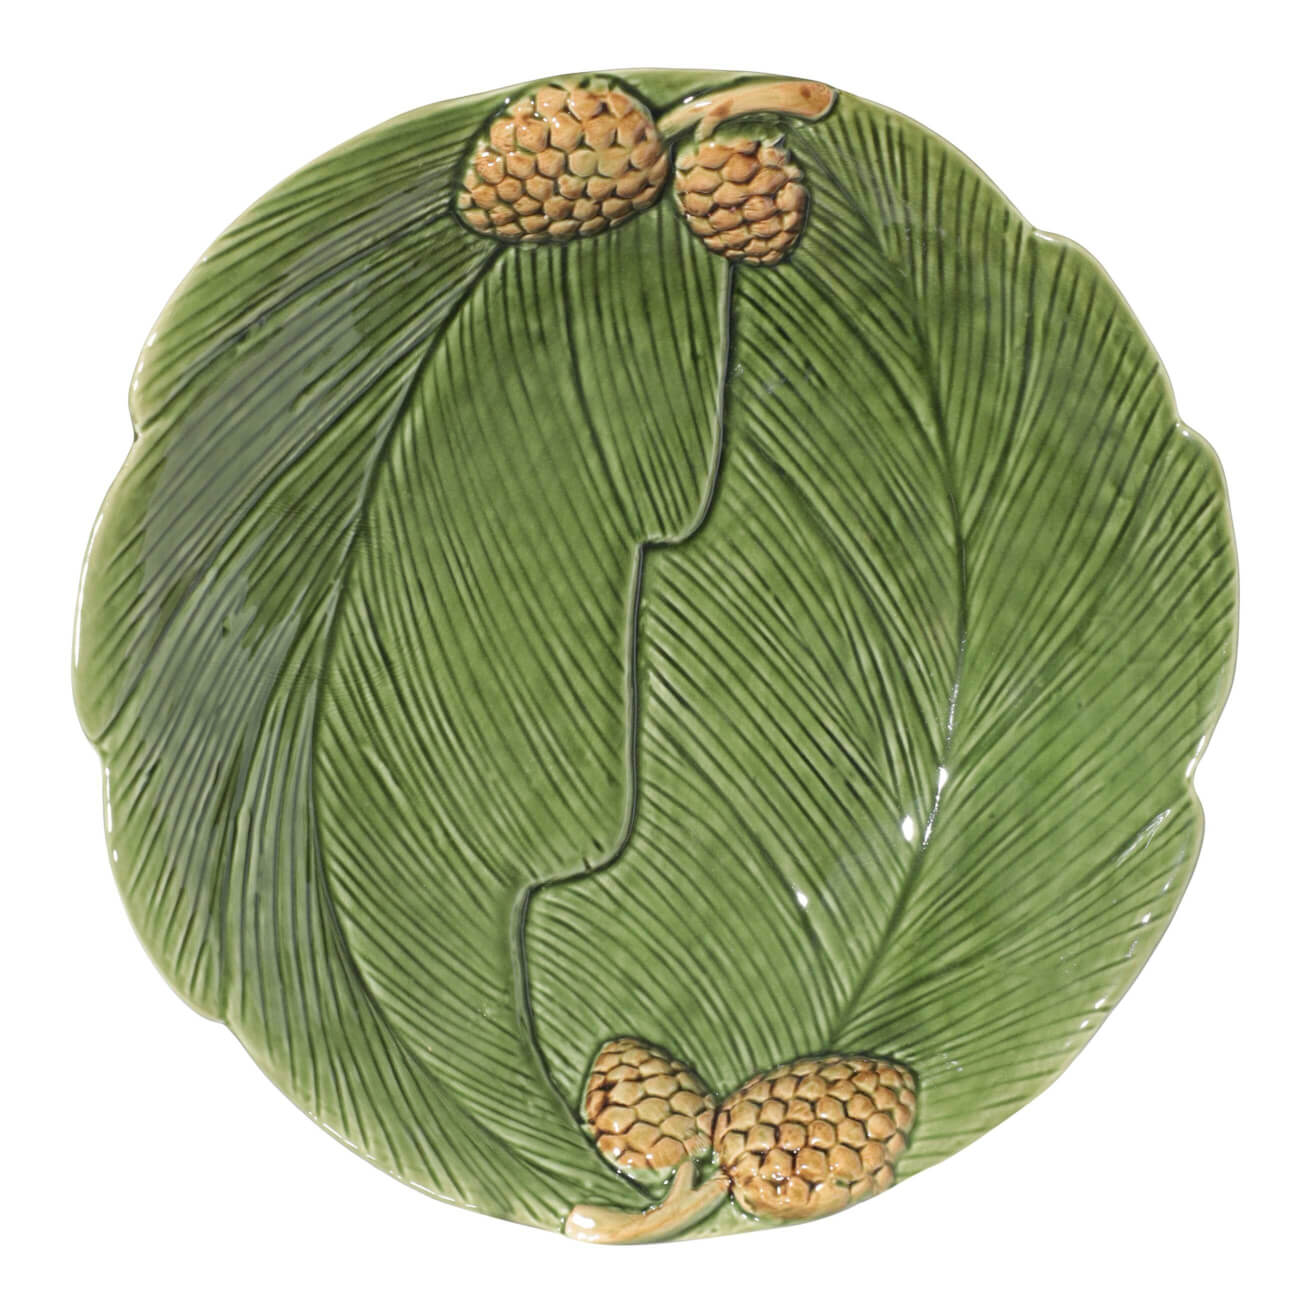 Блюдо, 26 см, керамика, круглое, зеленое, Шишки на листе, Fir cone